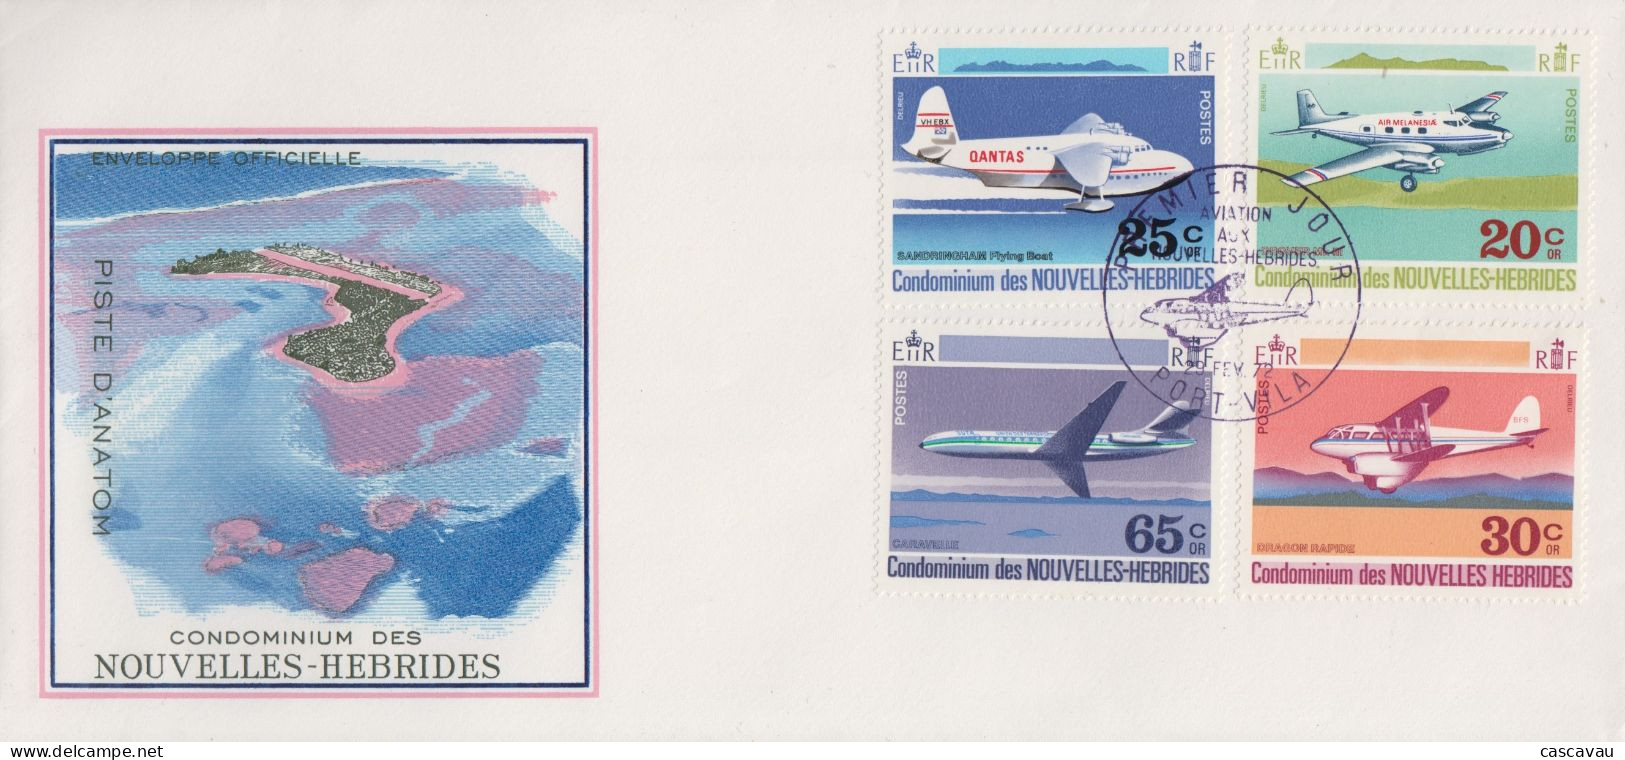 Enveloppe  FDC  1er  Jour   NOUVELLES  HEBRIDES   Aviation   1972 - FDC